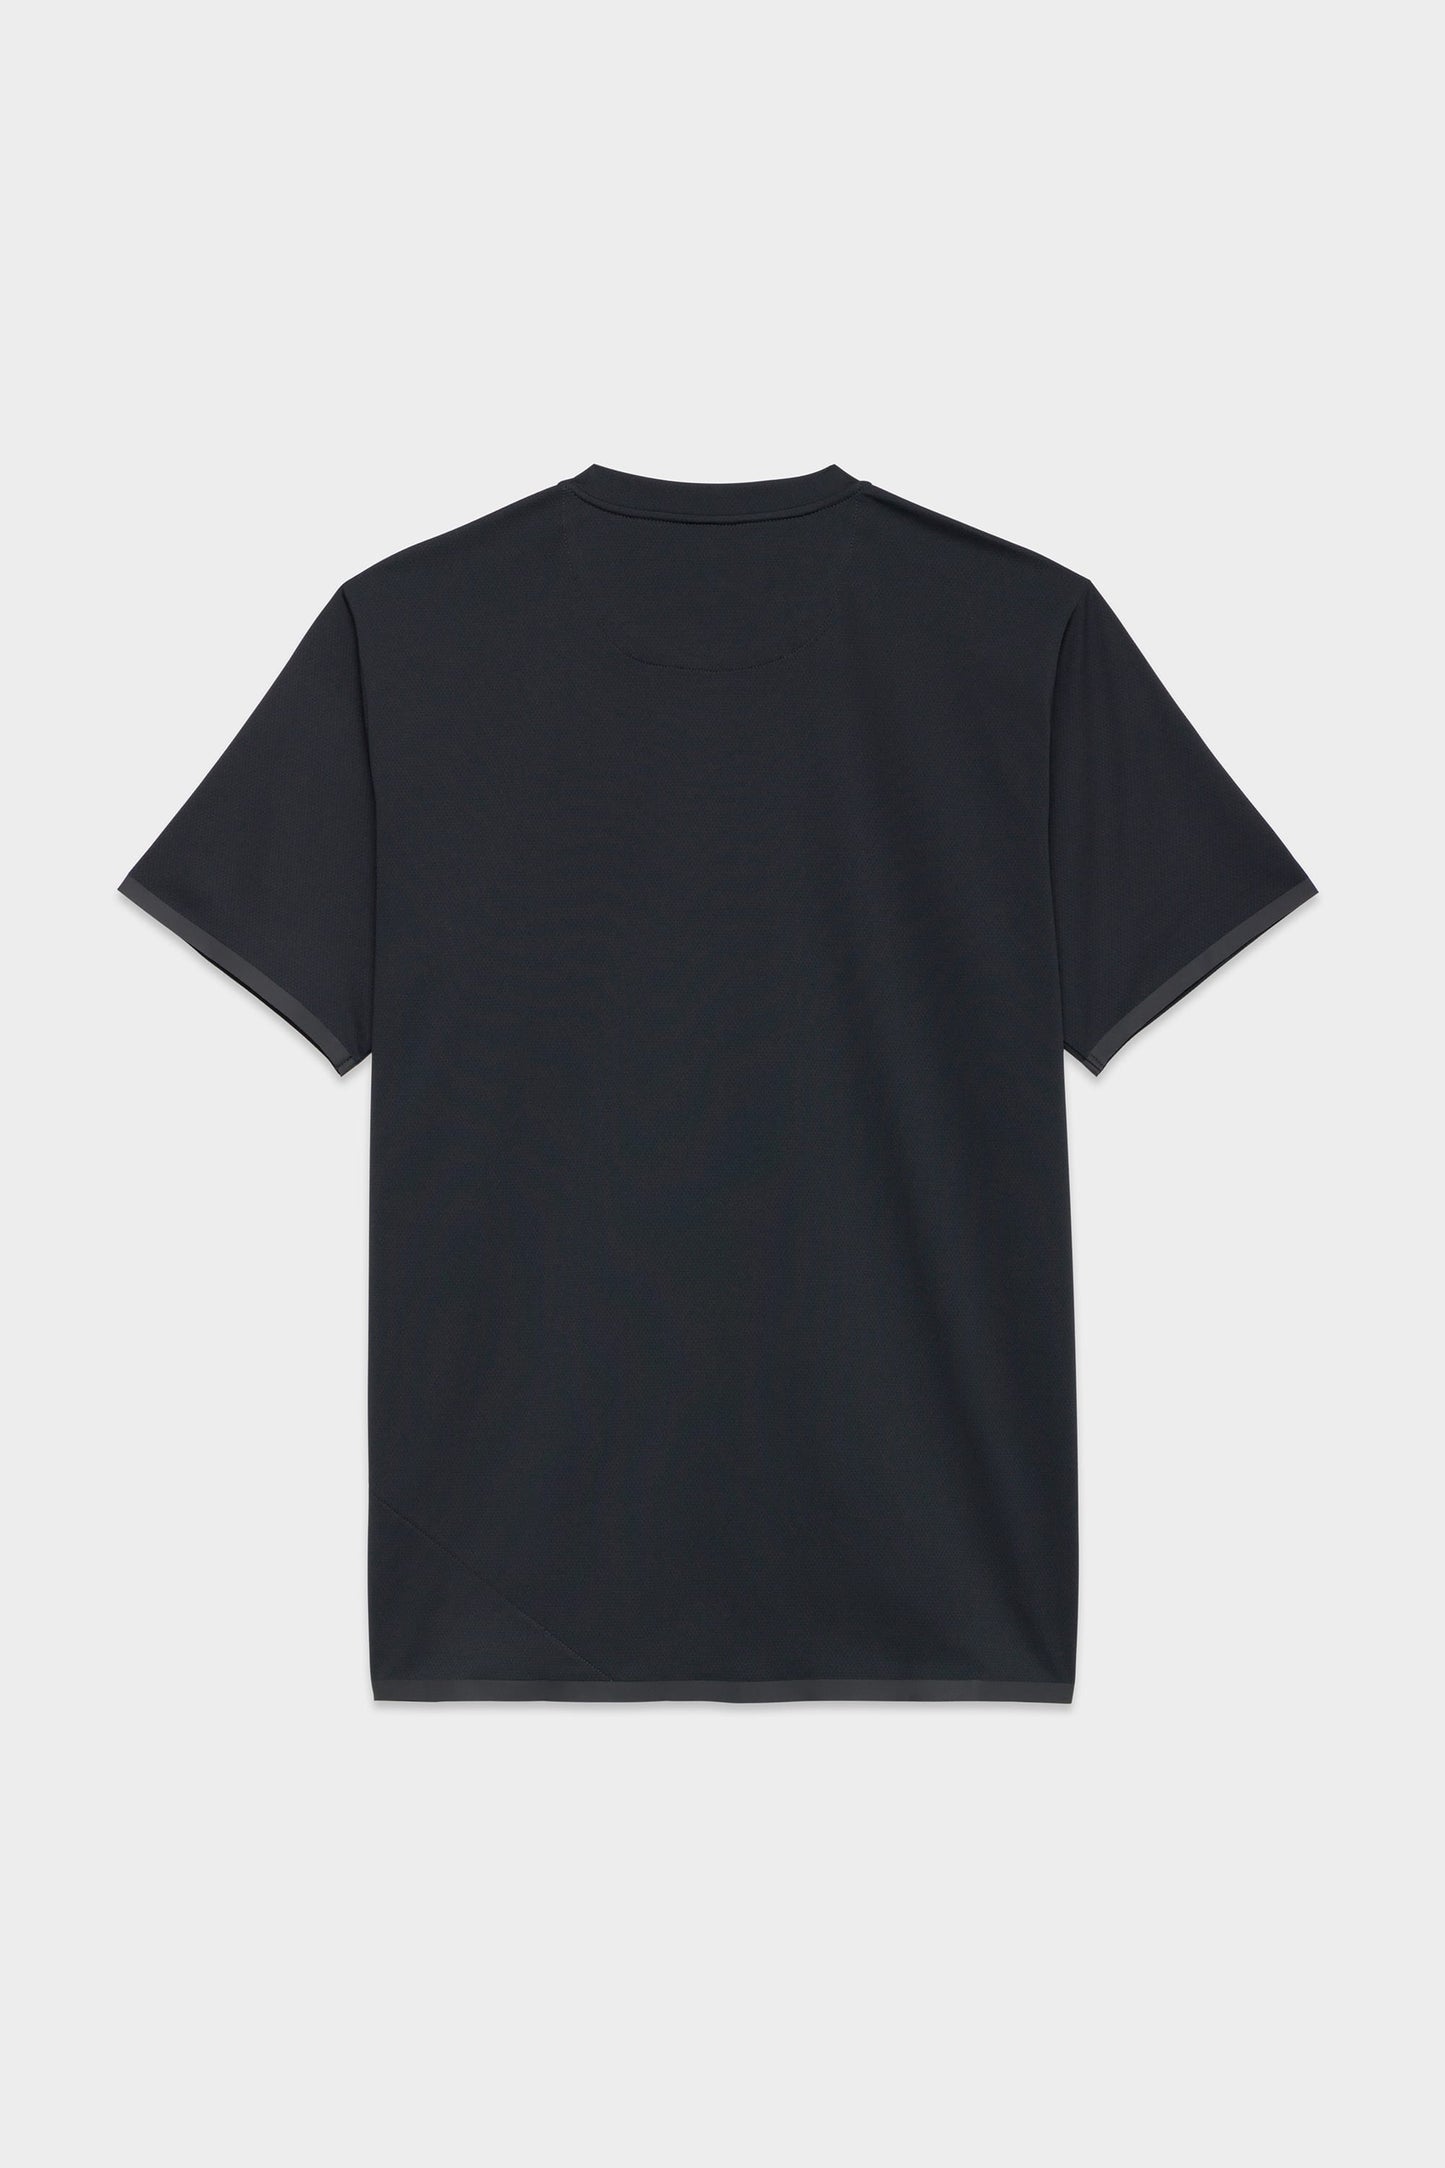 686 Men's Lets Go Tech Short Sleeve T-shirt